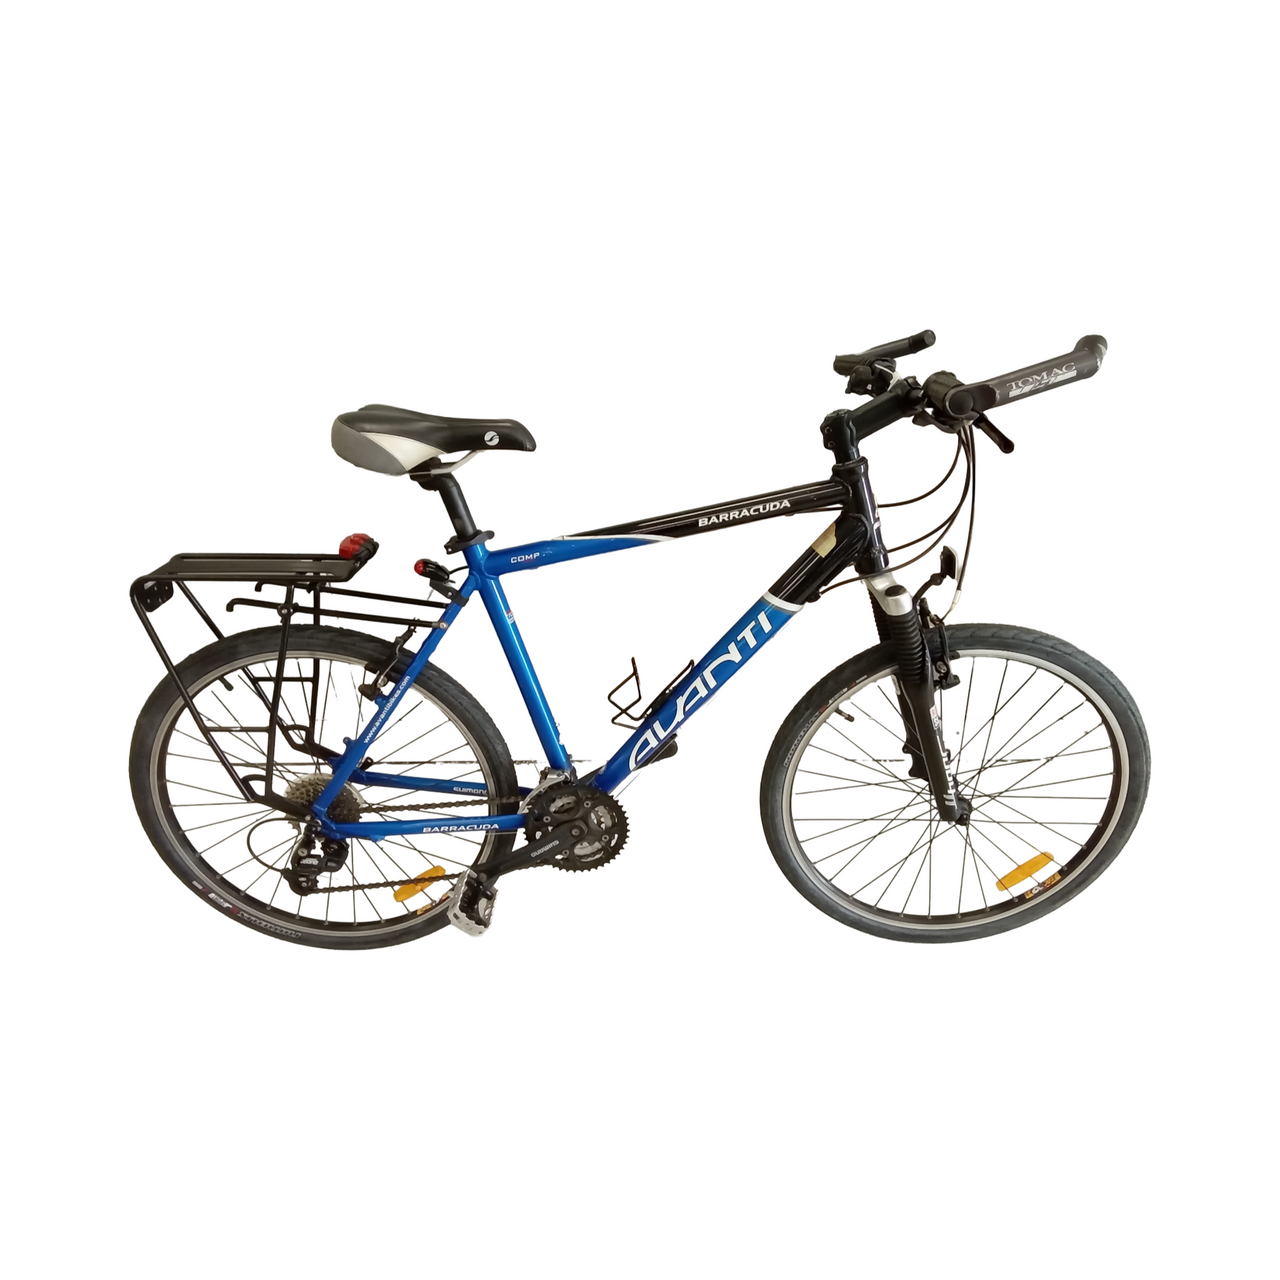 1816 - 50cm26" Black,
Blue, Mountain Bike, Bike